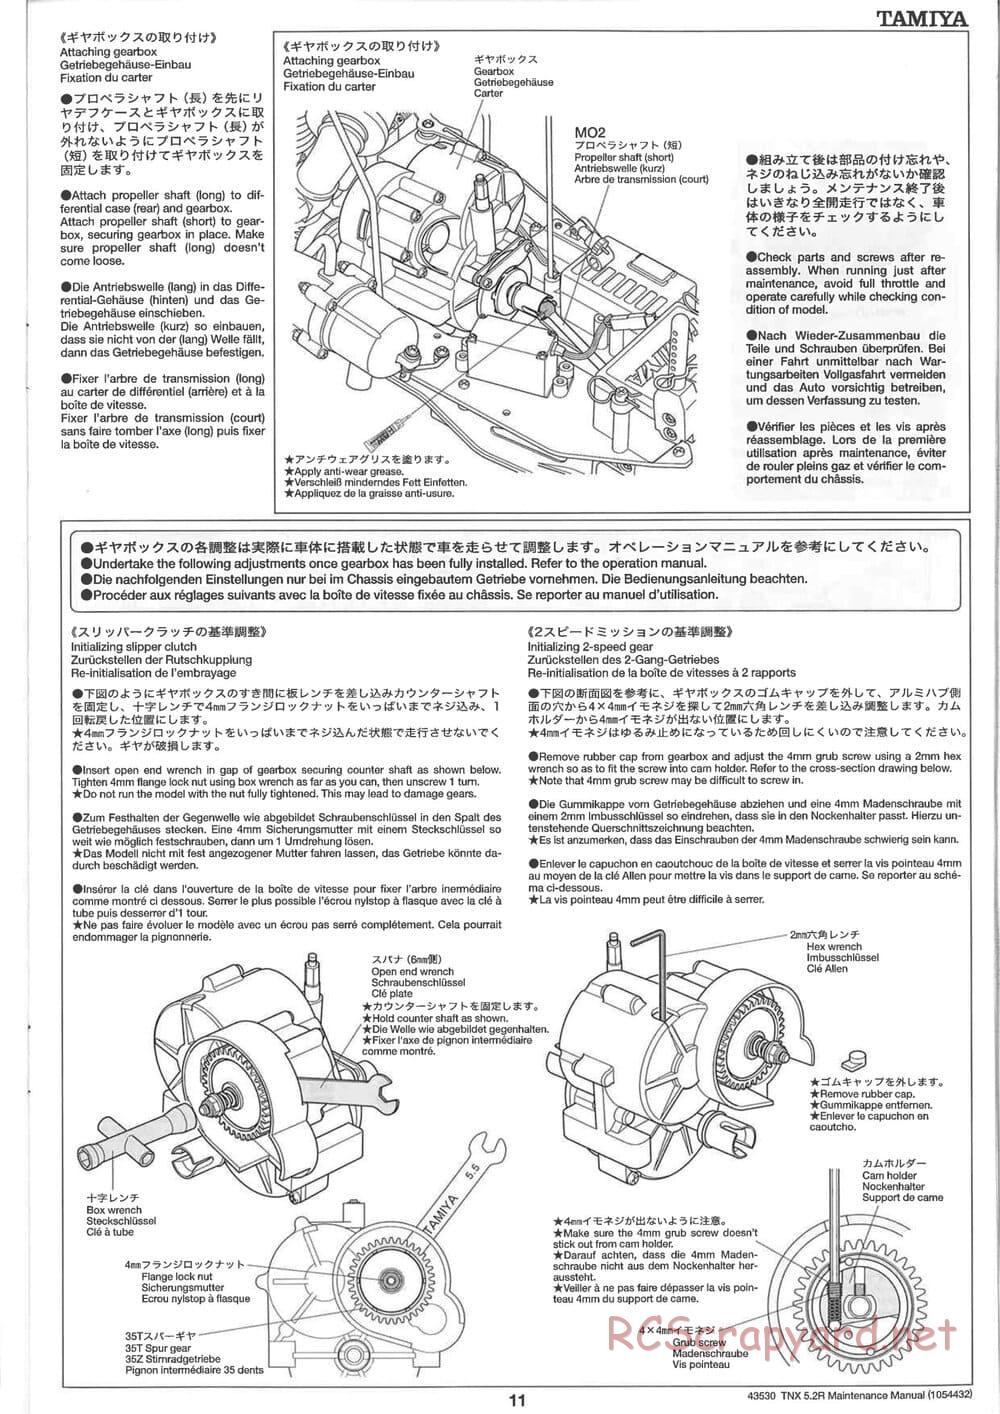 Tamiya - TNX 5.2R - TGM-04 - Maintenance Manual - Page 11